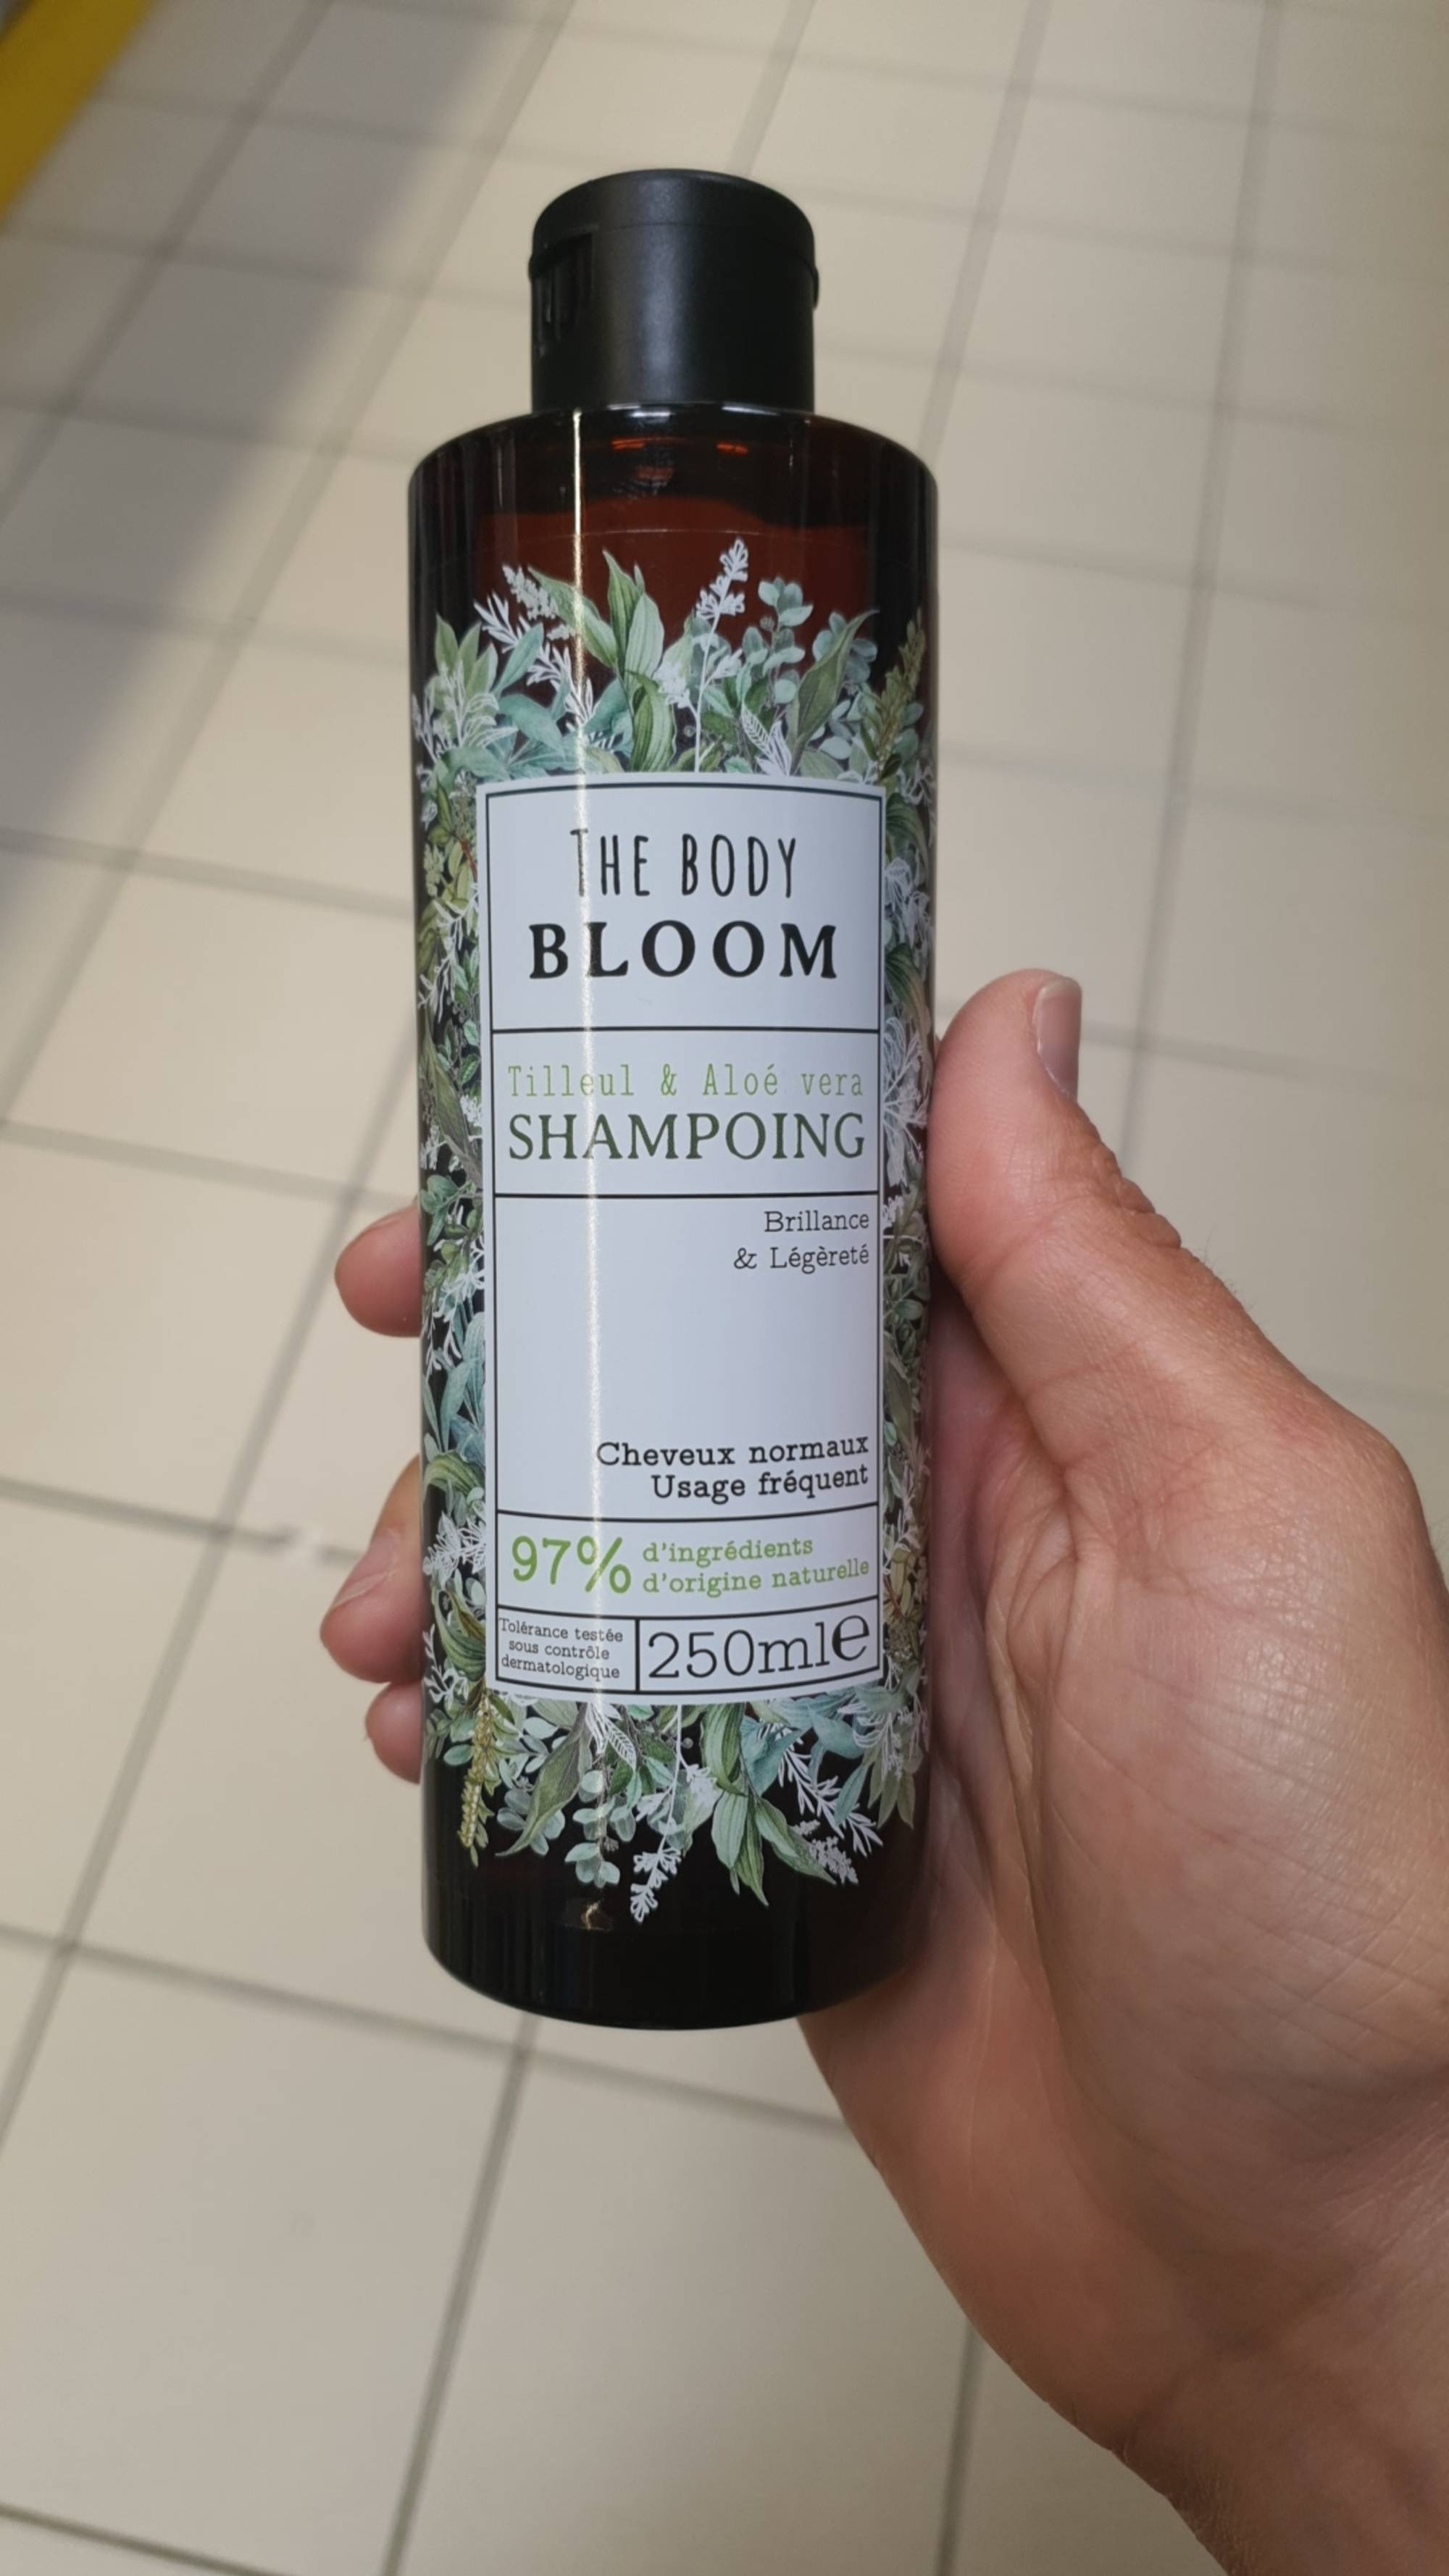 THE BODY BLOOM - Tilleul & Aloé vera shampoing